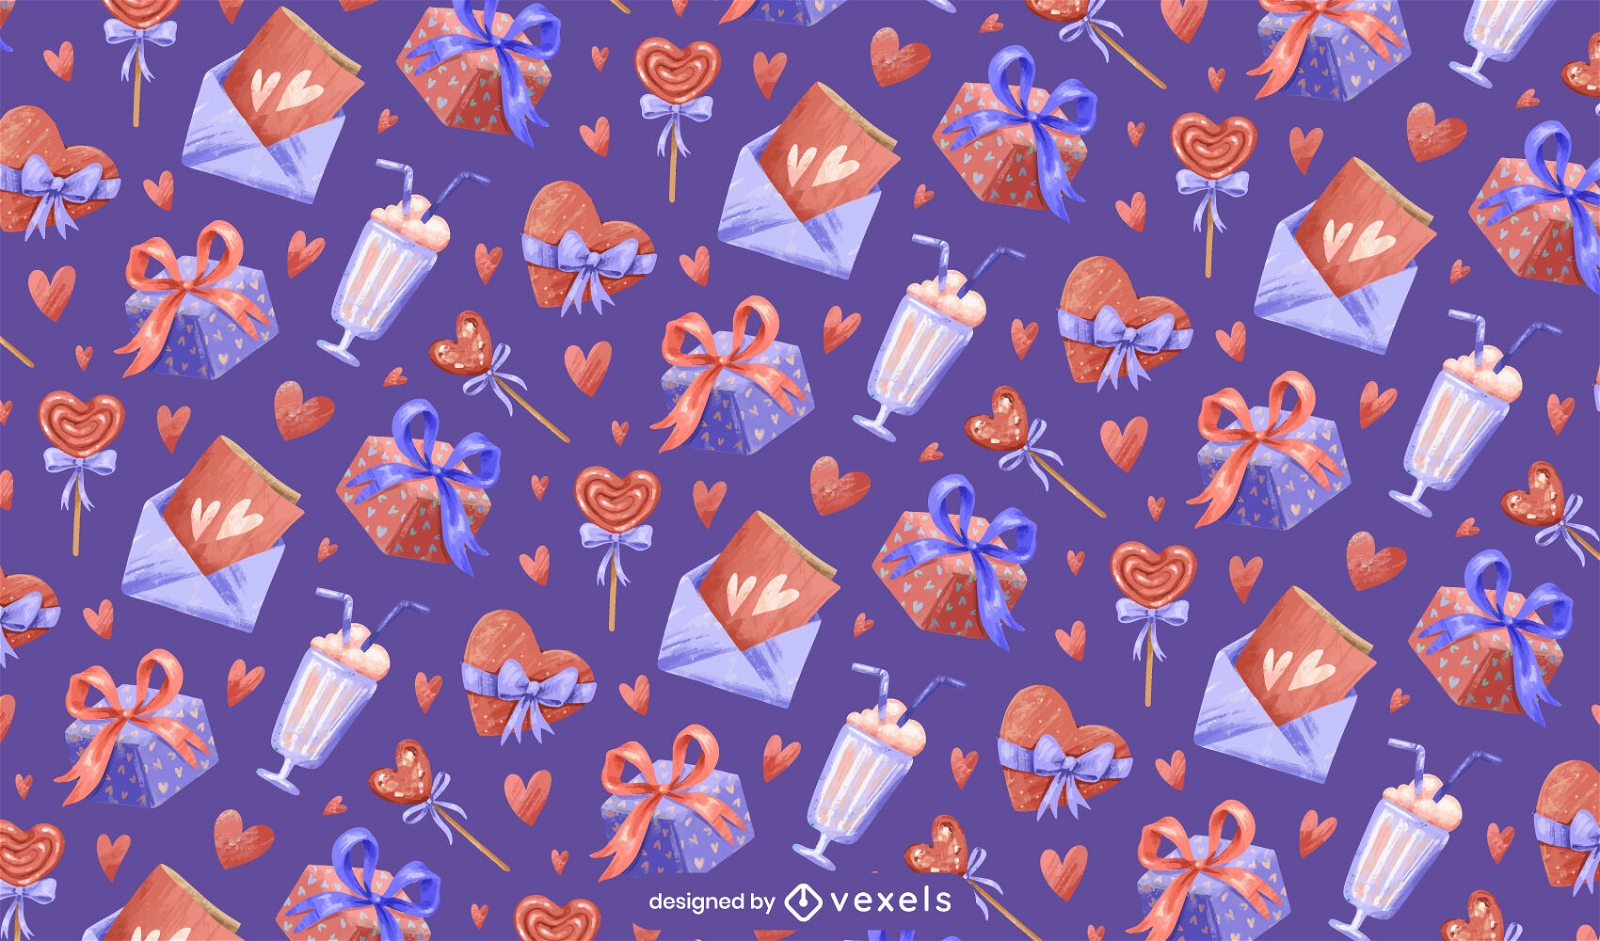 Cool Valentine's day candy pattern design